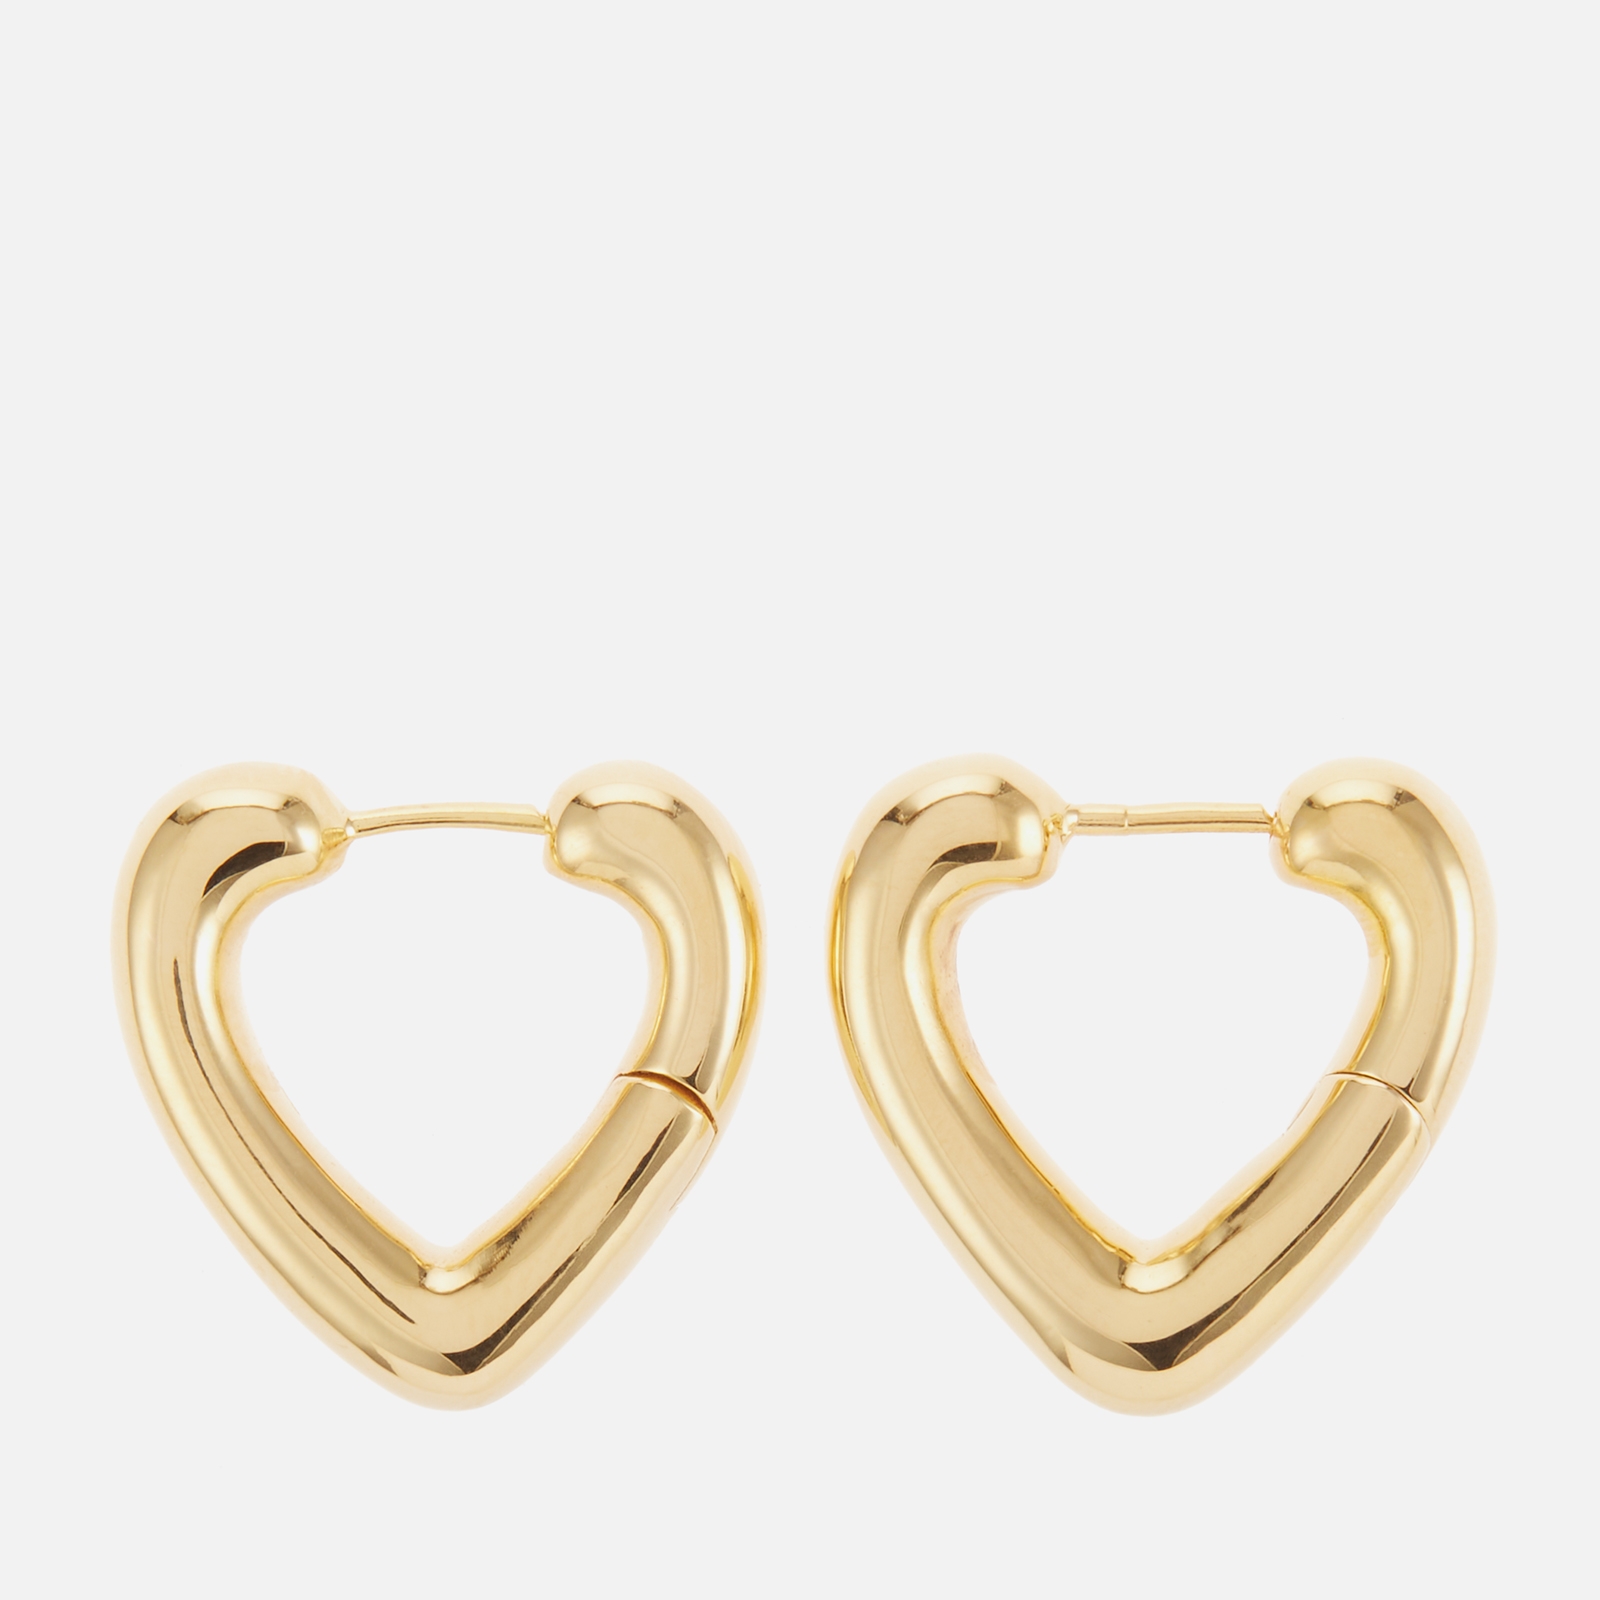 Astrid & Miyu Heart 18K Gold-Plated Sterling Silver Open Hoops